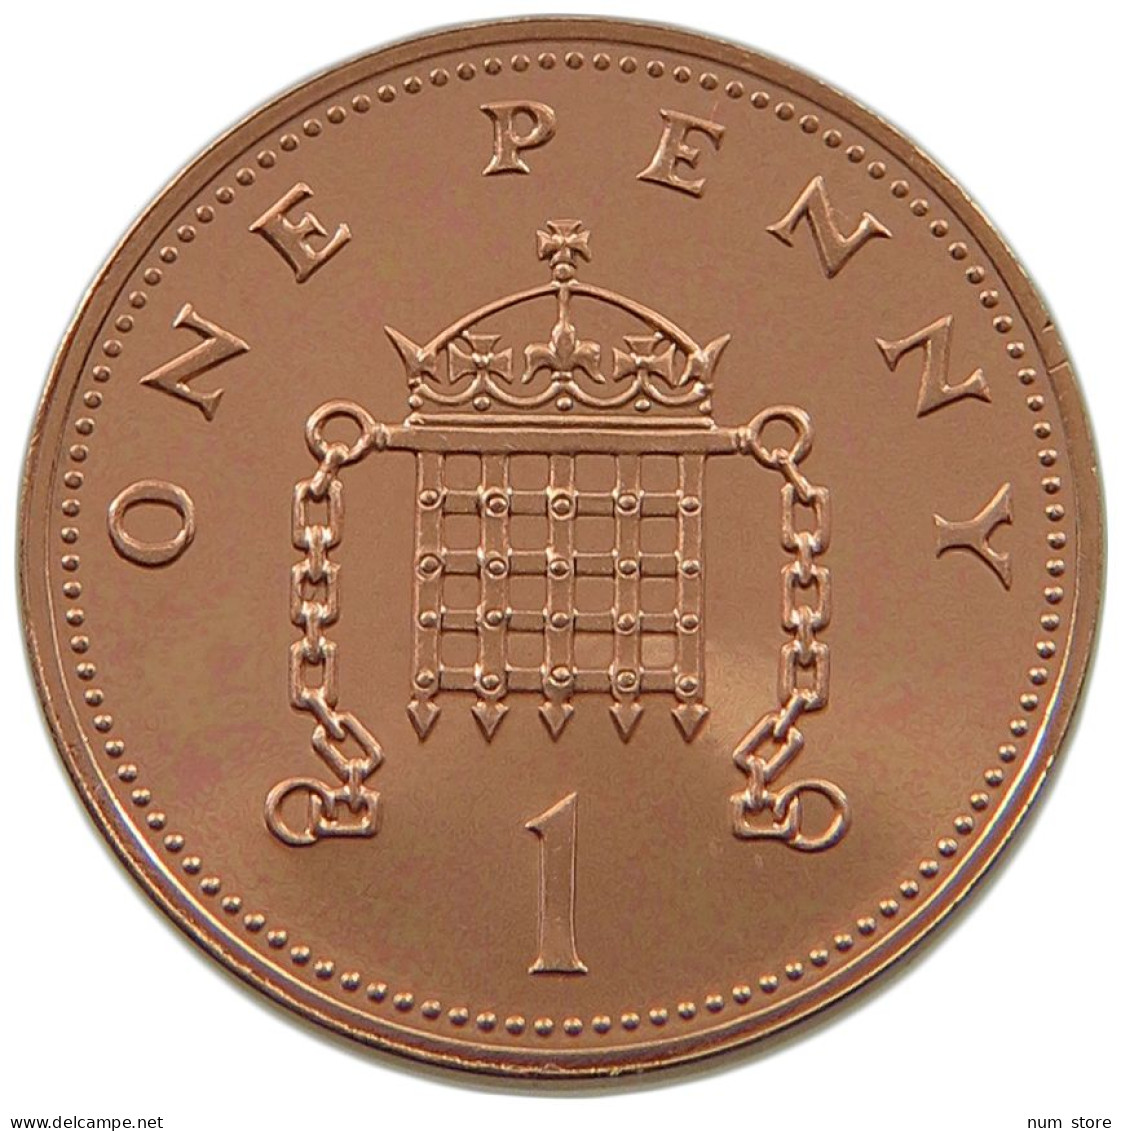 GREAT BRITAIN PENNY 1988 Elisabeth II. (1952-) #alb022 0543 - 1 Penny & 1 New Penny